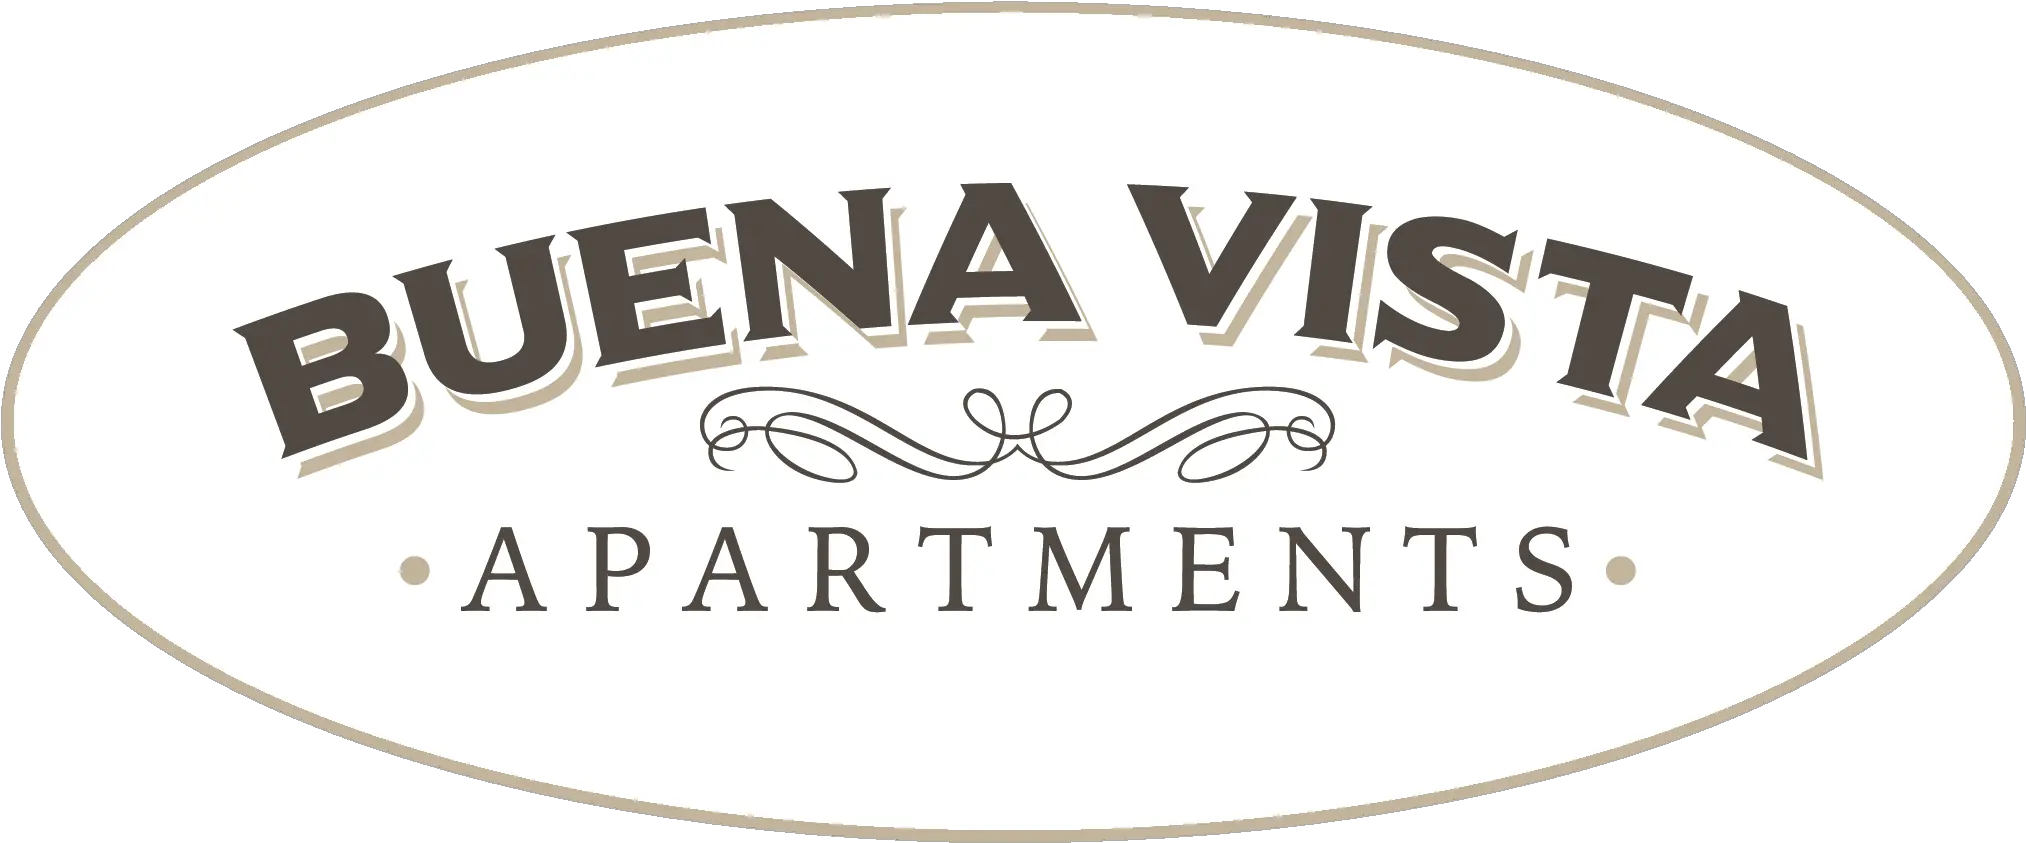 Buena Vistaapartmentslogowithovalframetransparent Buena Vista Apartment Logo Png Frame Transparent Background